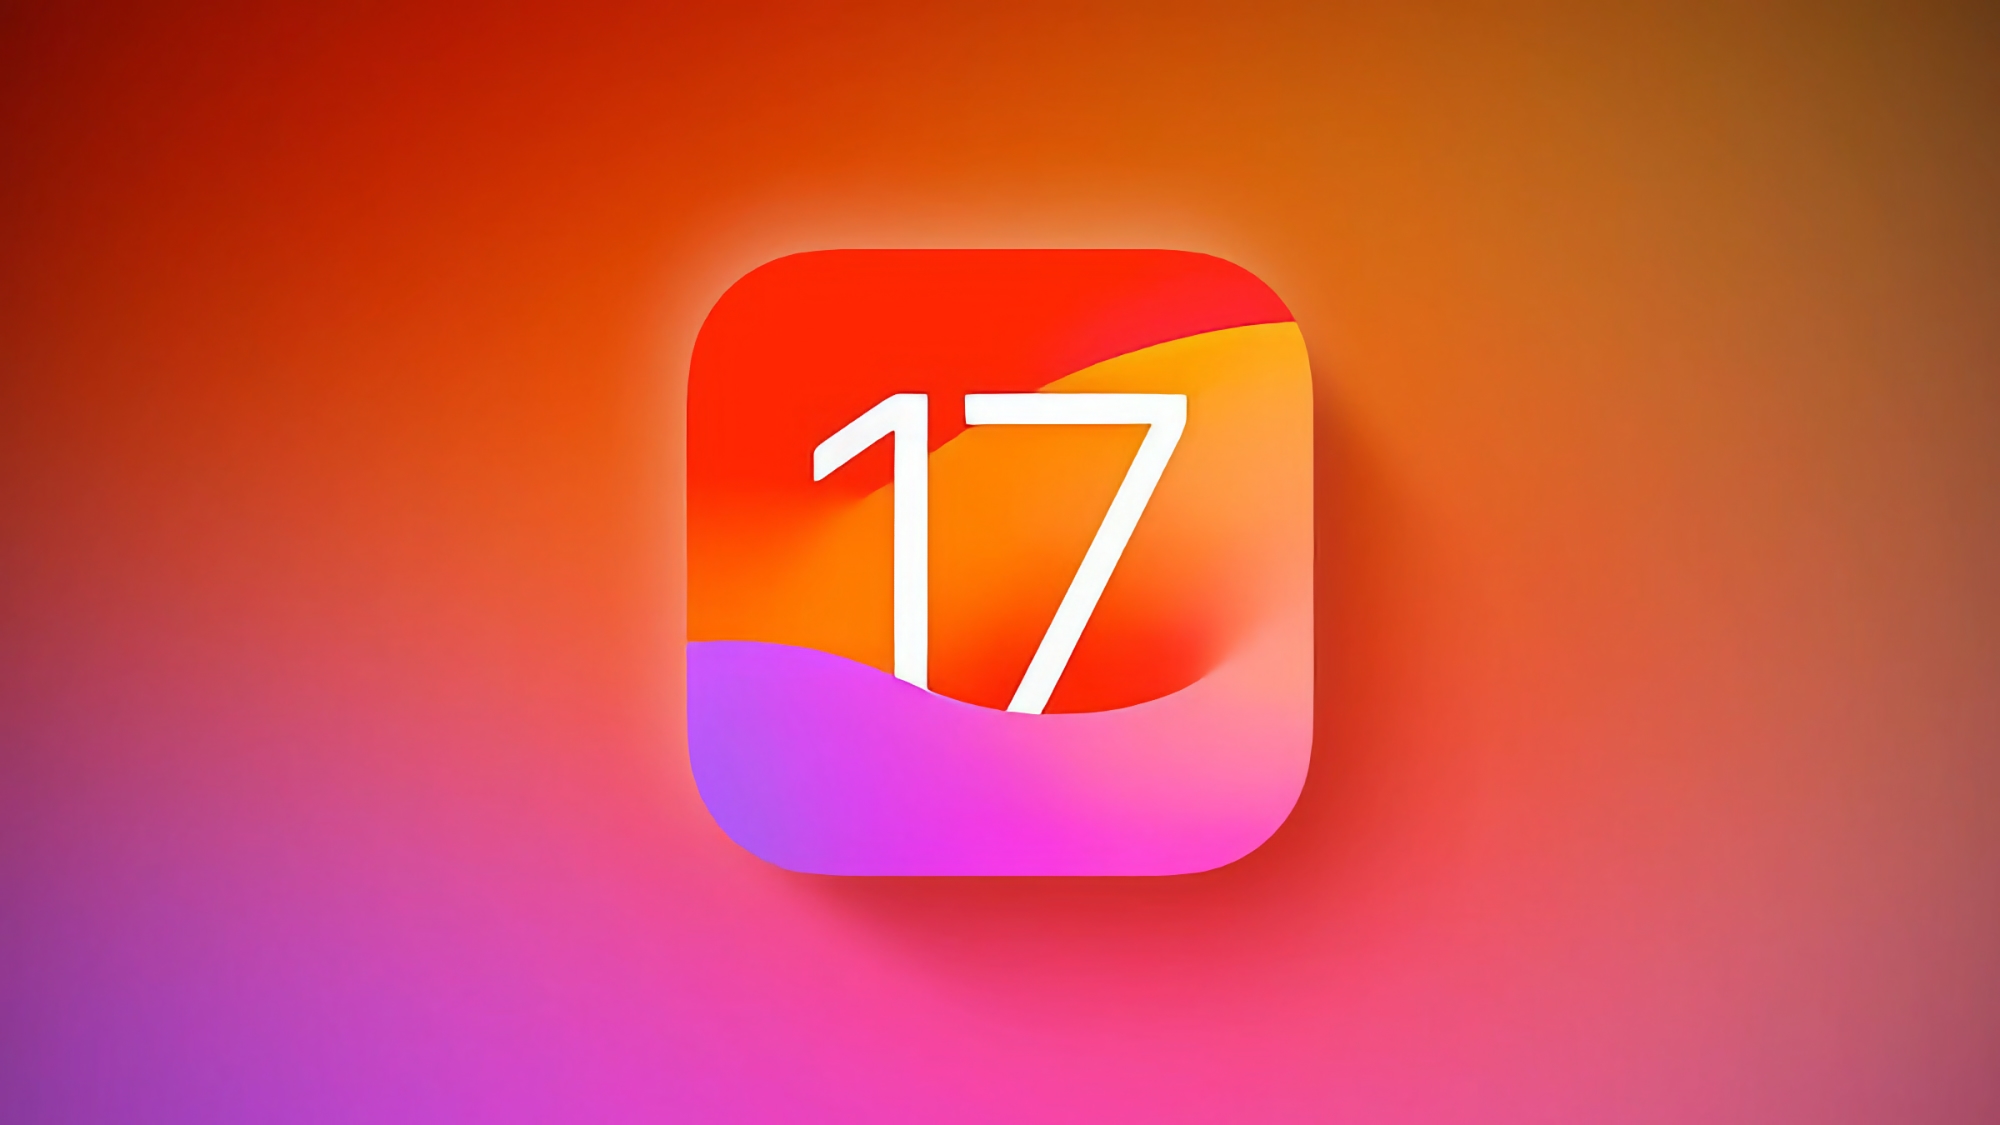 Was ist neu in iOS 17 Beta 4